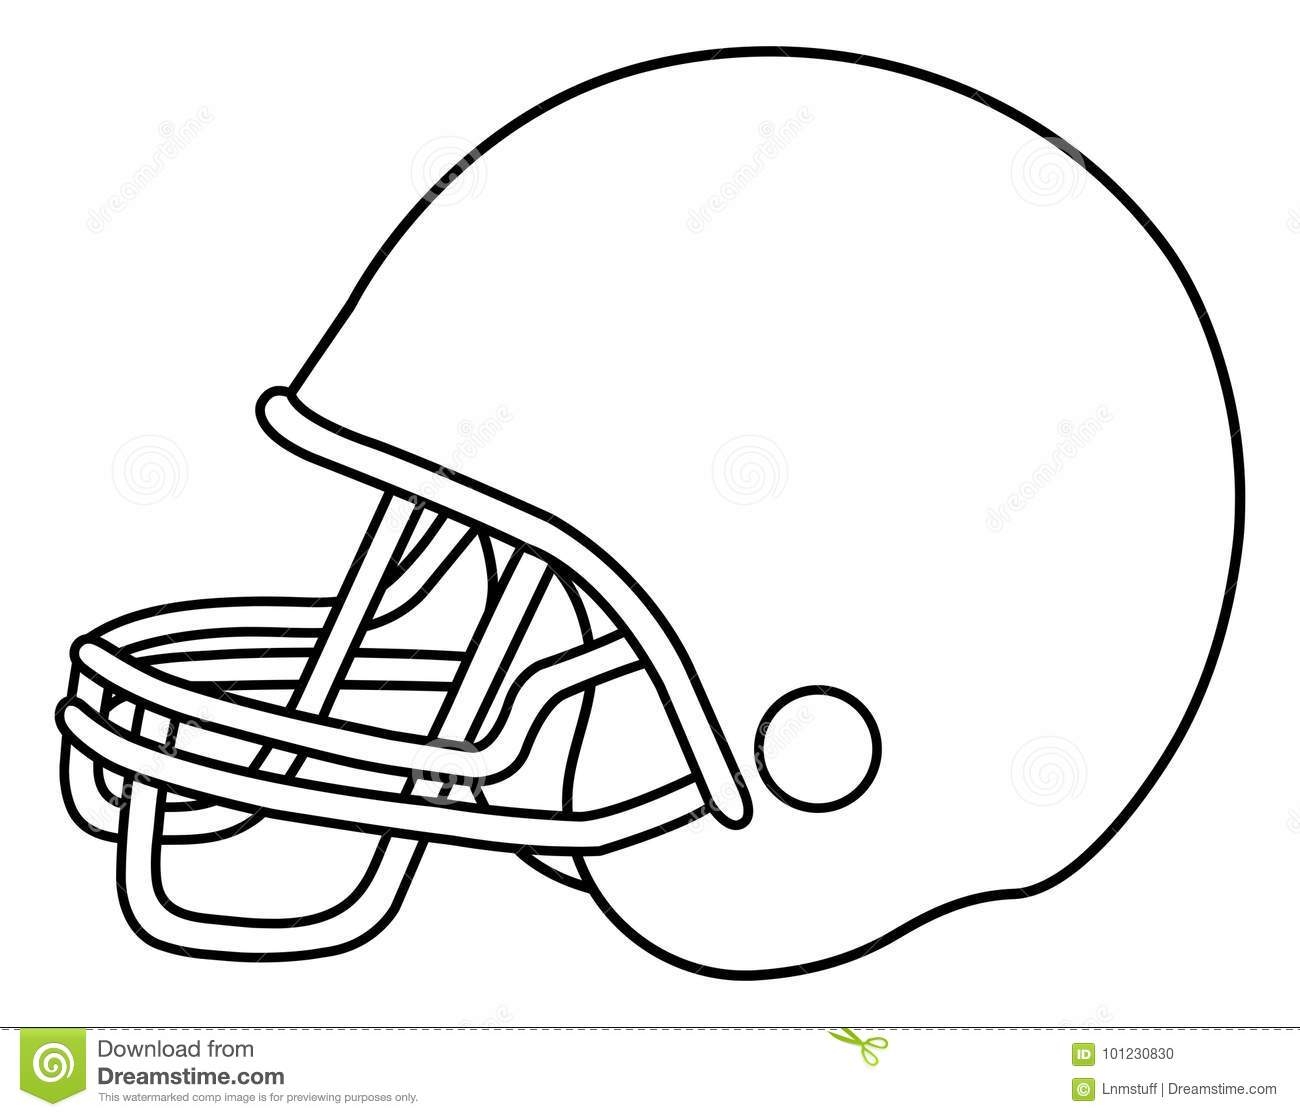 Football Helmet Template Stock Illustrations 2 284 Football Helmet Template Stock Illustrations Vectors Clipart Dreamstime